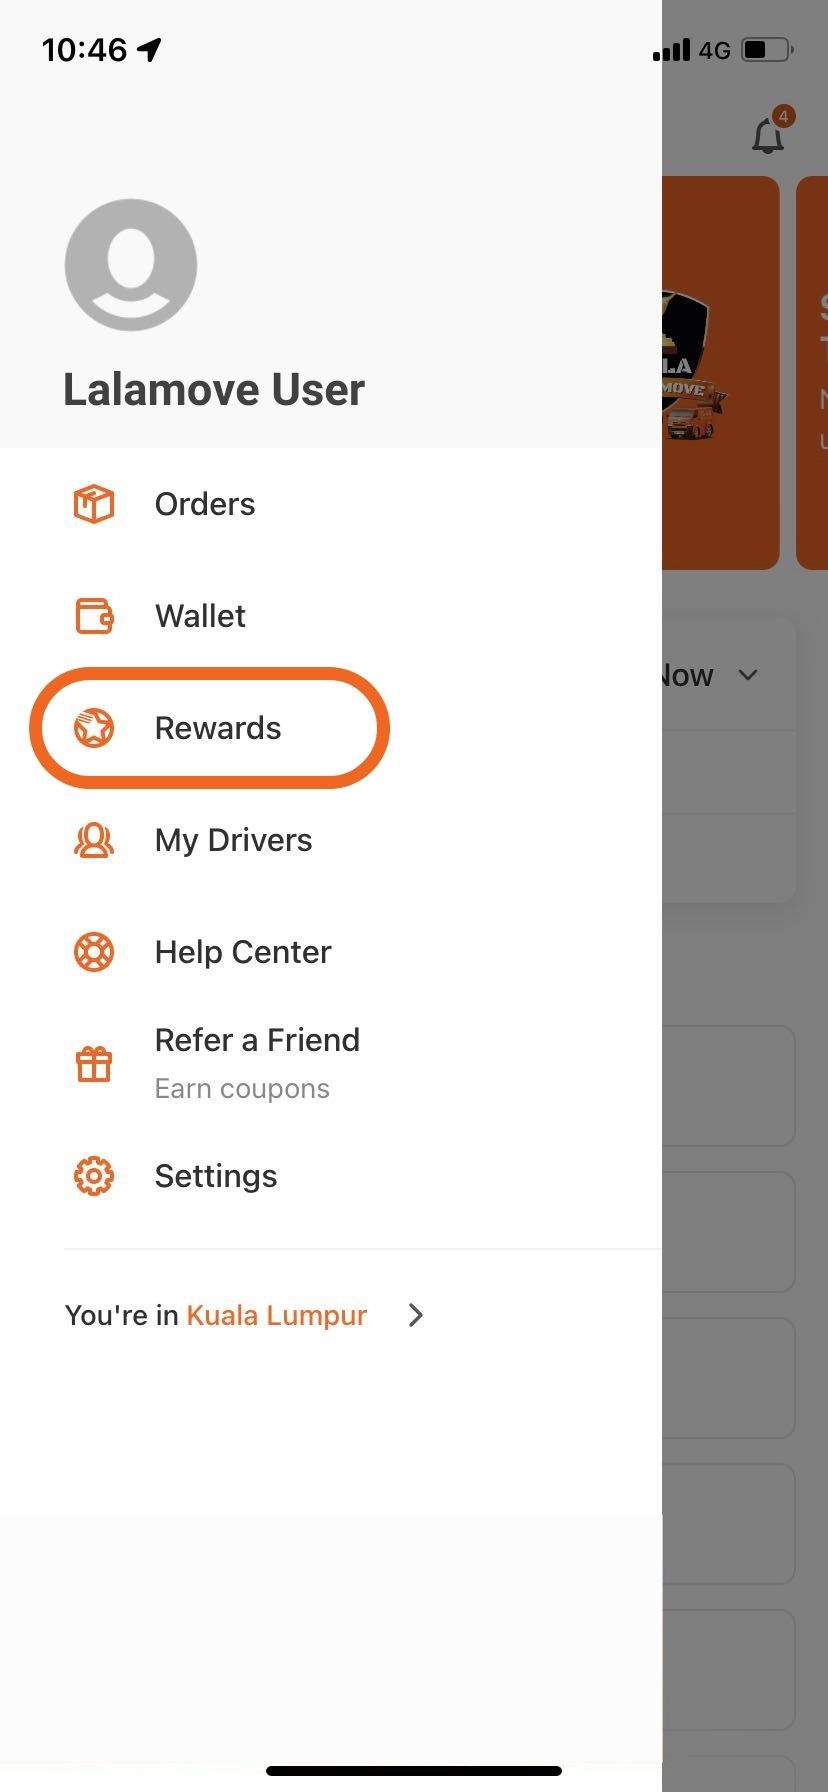 lalamove rewards on side menu